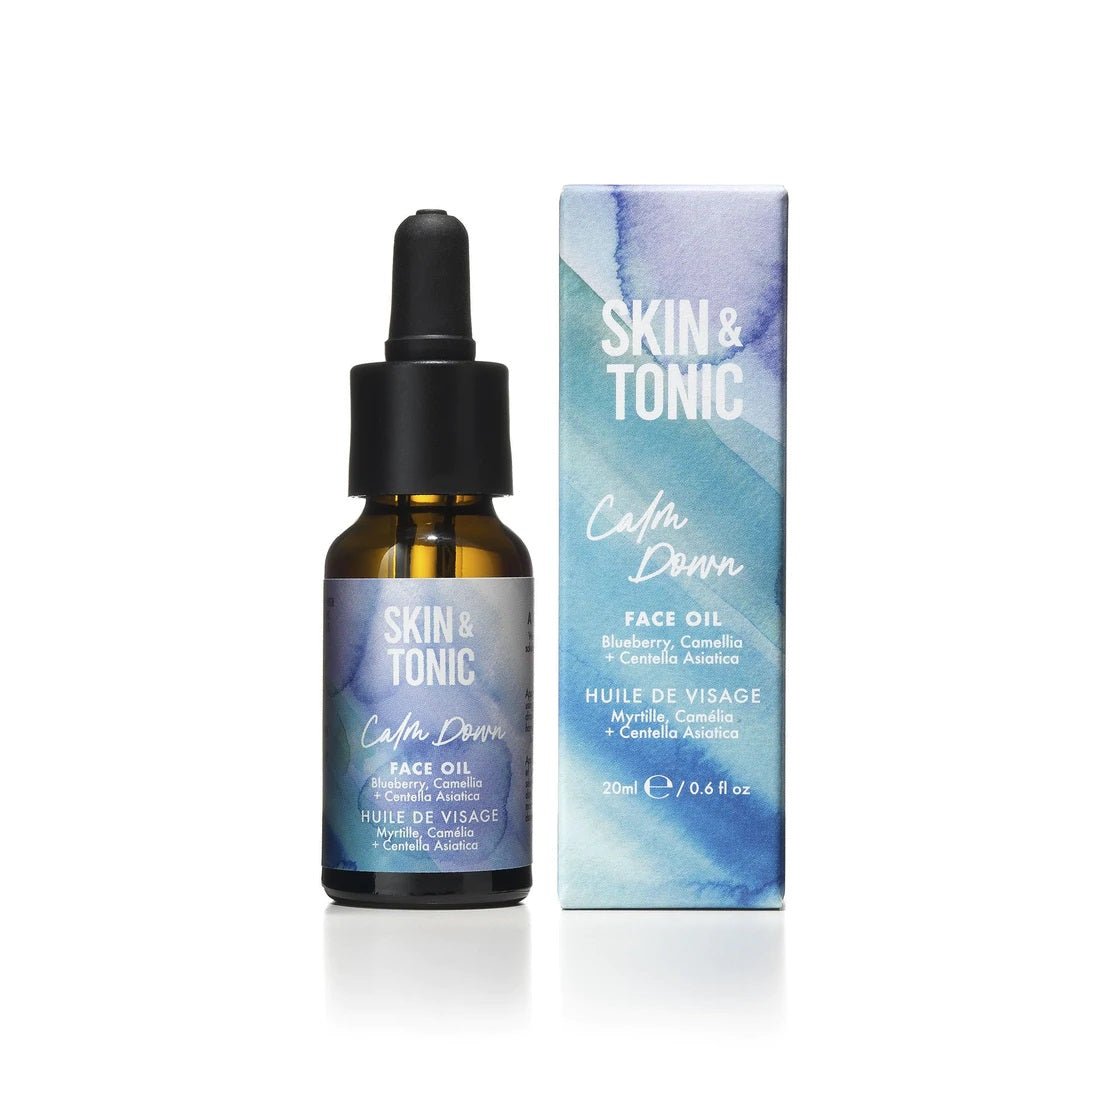 Skin & Tonic Skin & Tonic Calm Down Face Oil, 20 ml.